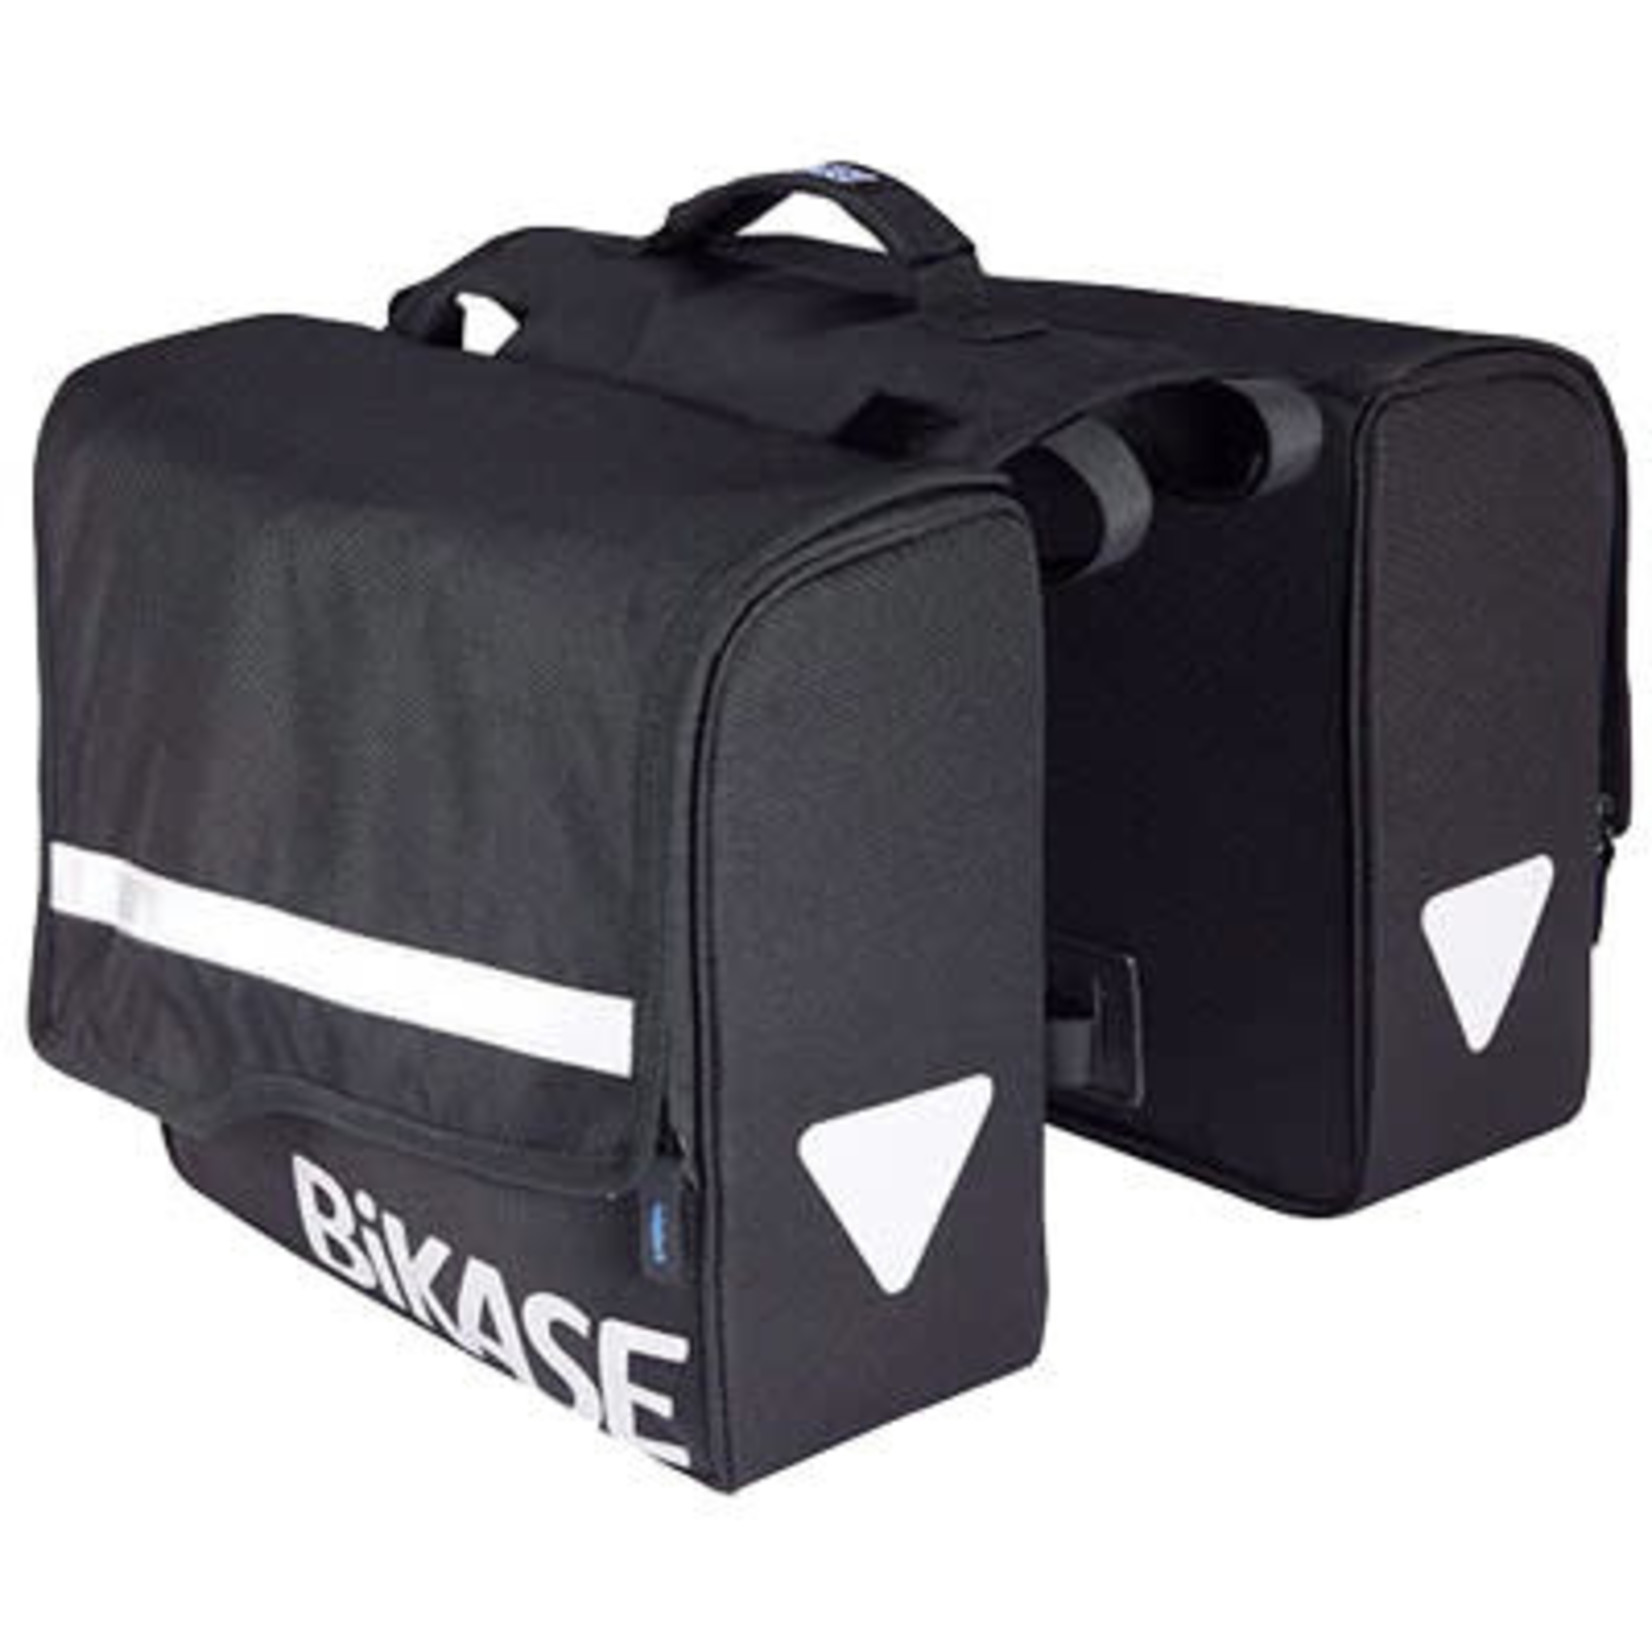 BIKASE City Pannier Rear bag with clips